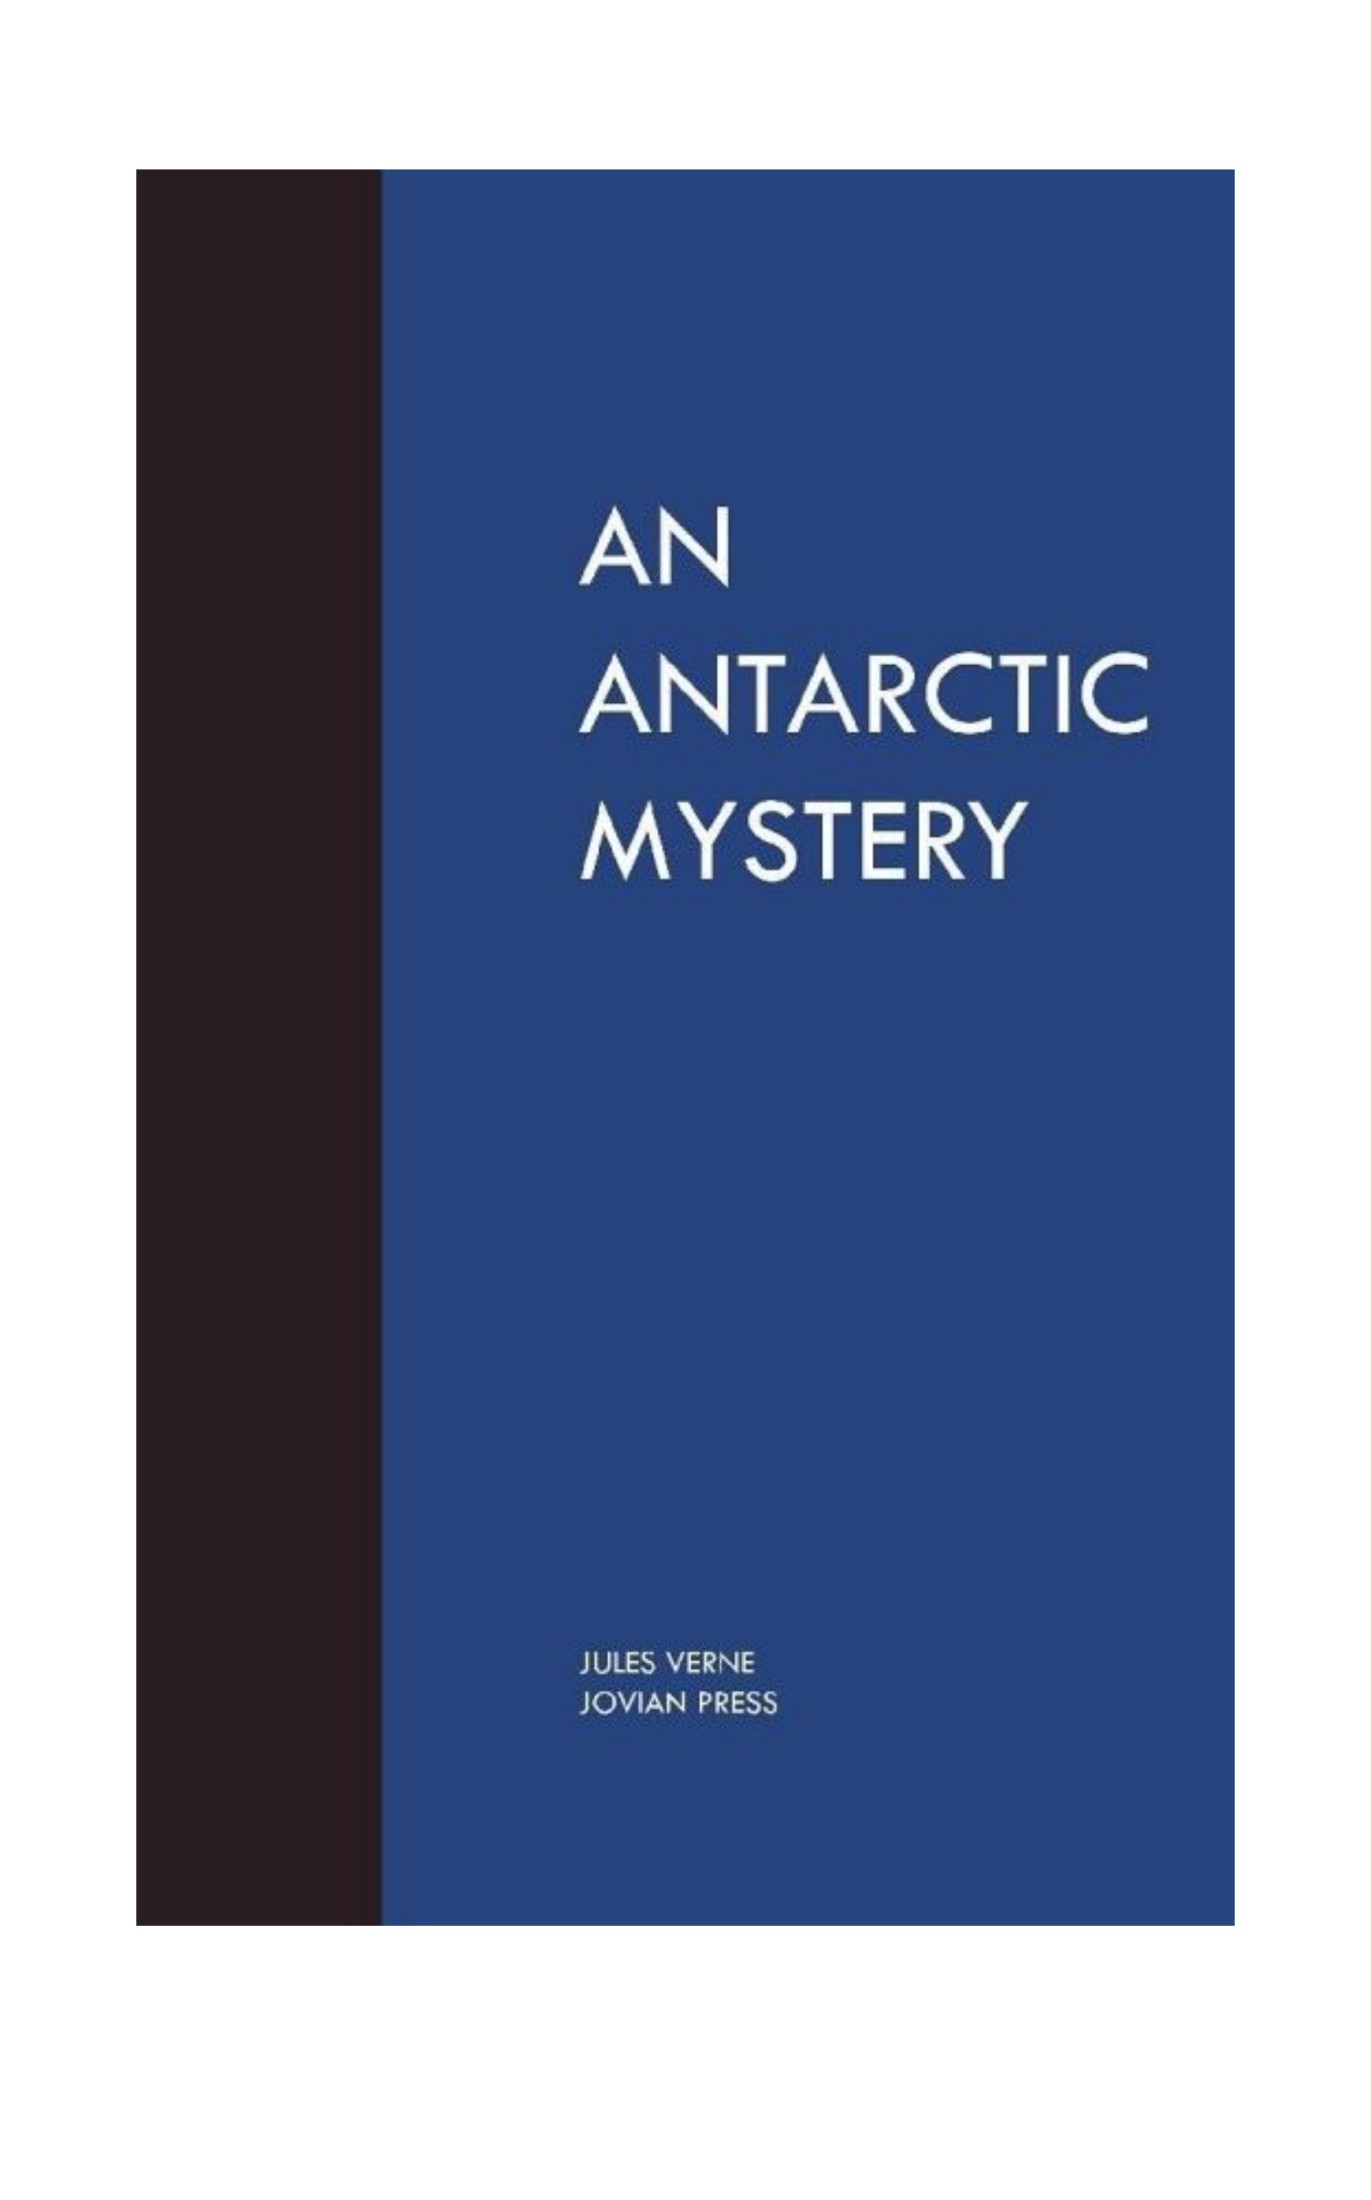 An Antartic Mystery